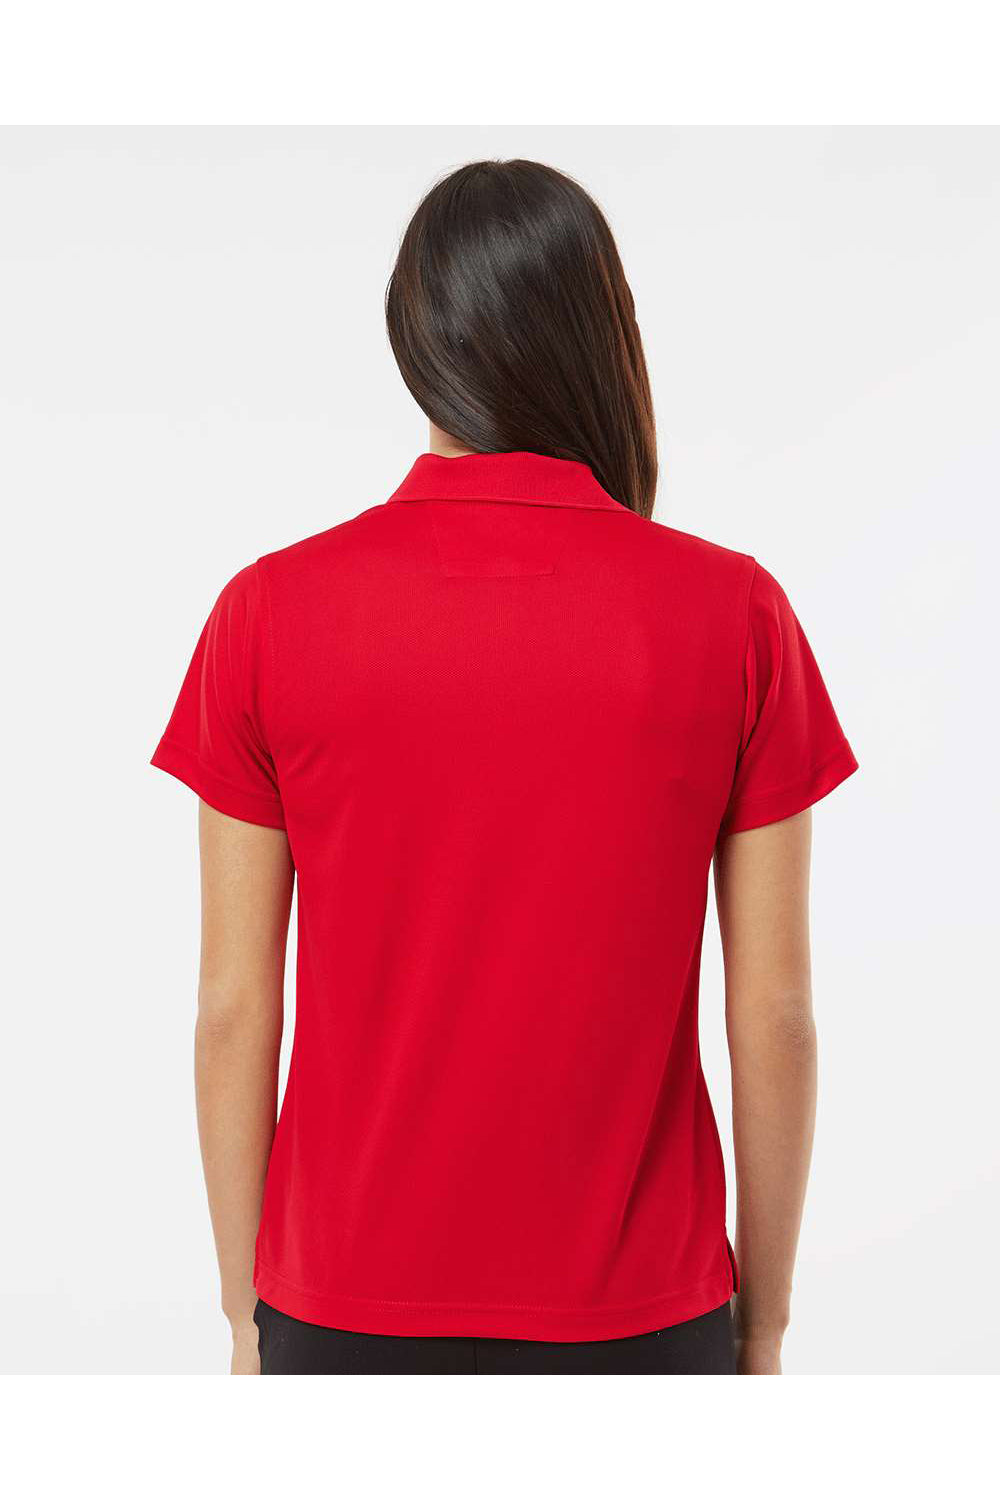 Paragon 104 Womens Saratoga Performance Mini Mesh Short Sleeve Polo Shirt Red Model Back